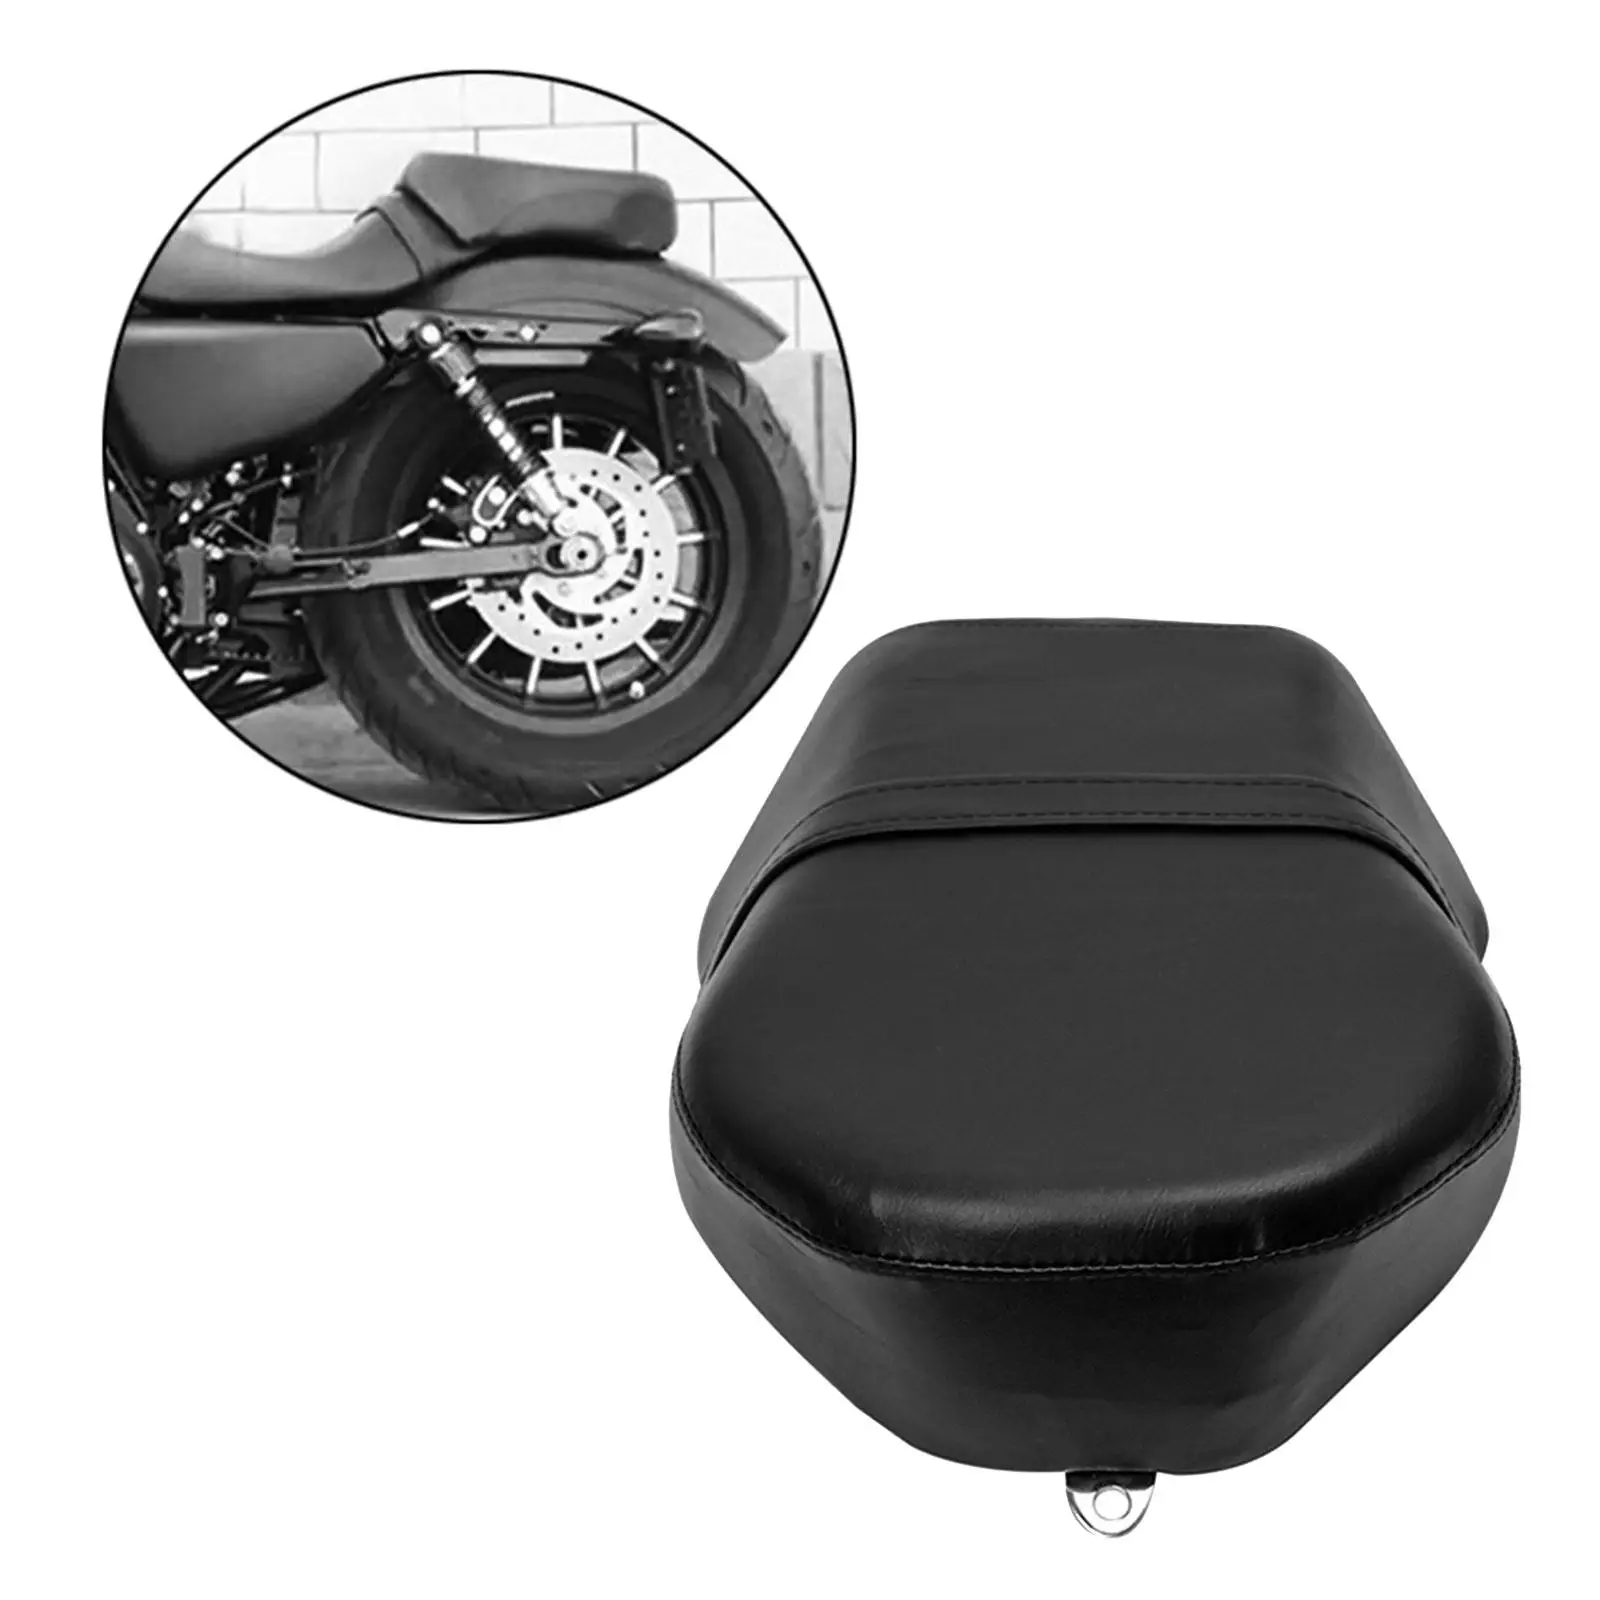 PU Leather Motorcycle Pillion Passenger Pad Seat Motorcycle Rear Passenger Seat Cushion for Harley Sportster 883 1200